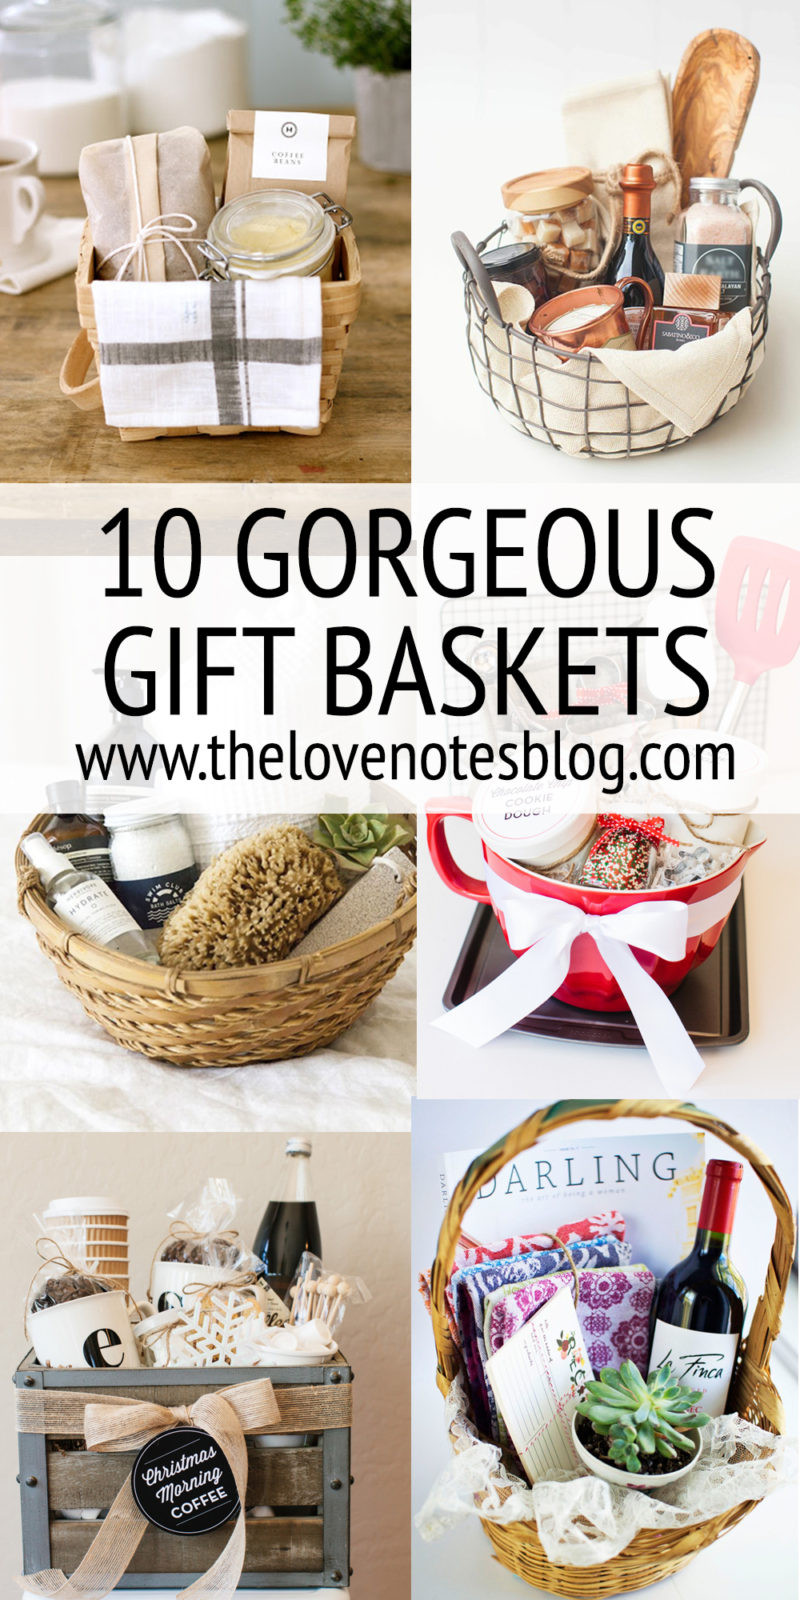 Gift Basket Theme Ideas
 GIFT BASKET IDEAS The Love Notes Blog